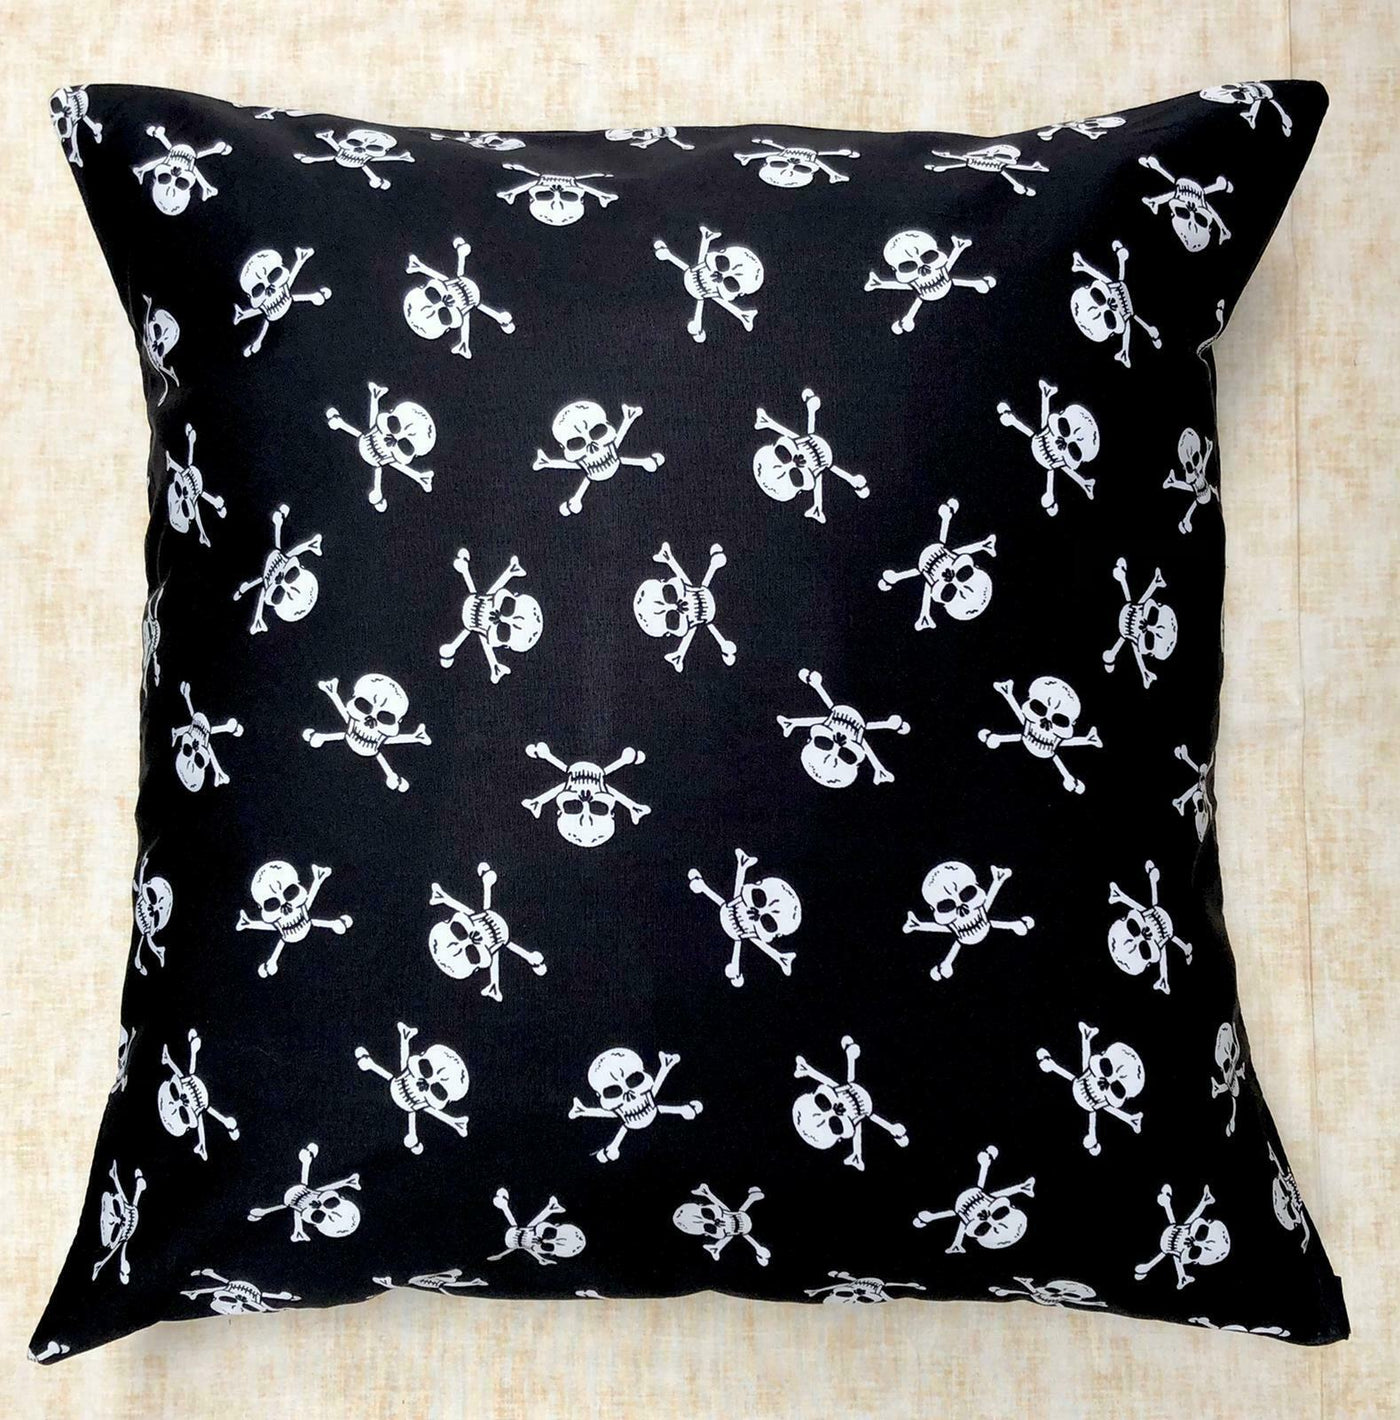 Skull & Cross Bone Pirate Cushion Cover Case fits 18" x 18" 100% Cotton